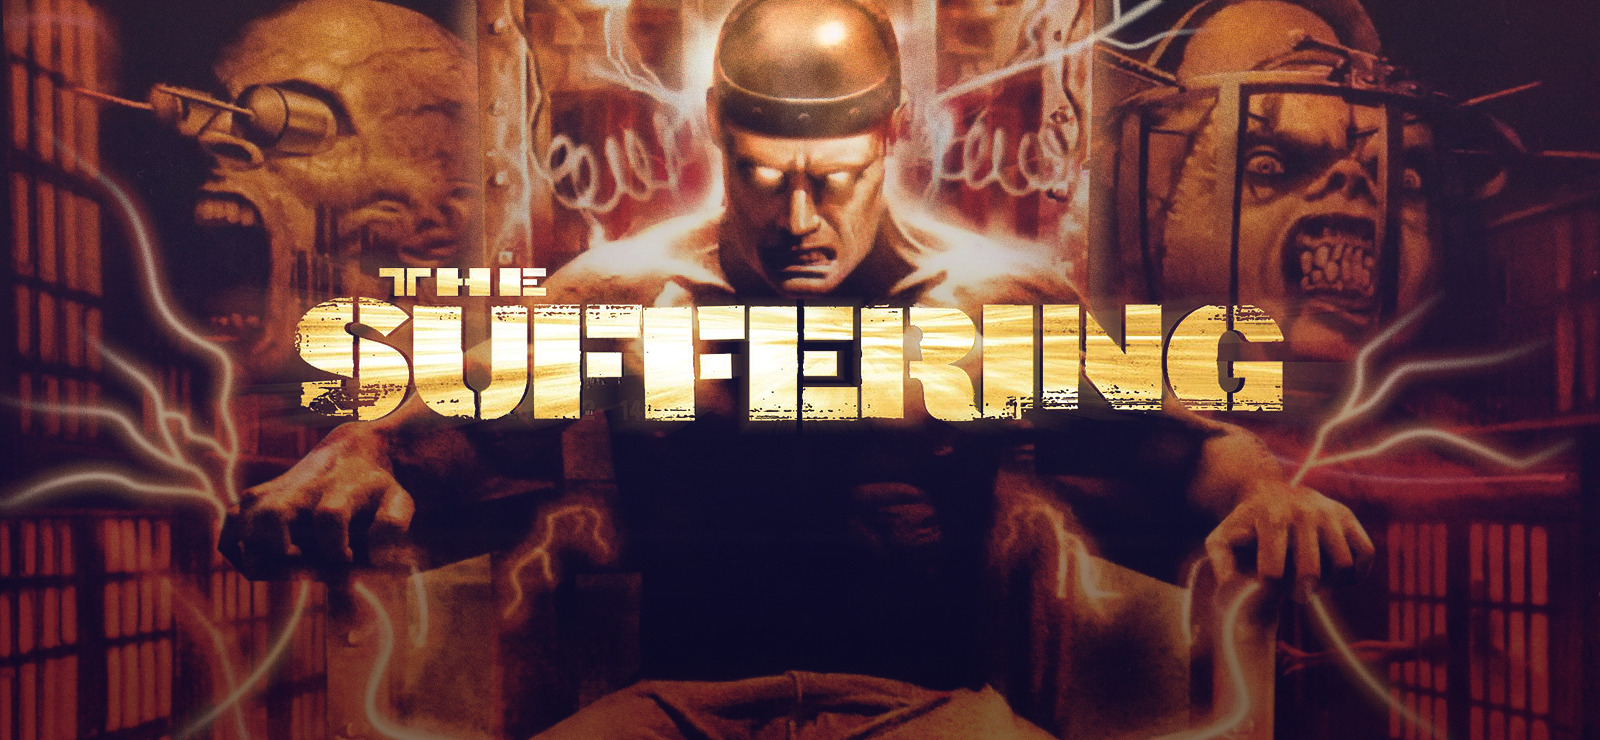 The Suffering: Ties That Bind for PS2  Jogos ps2, Jogos de playstation,  Jogos